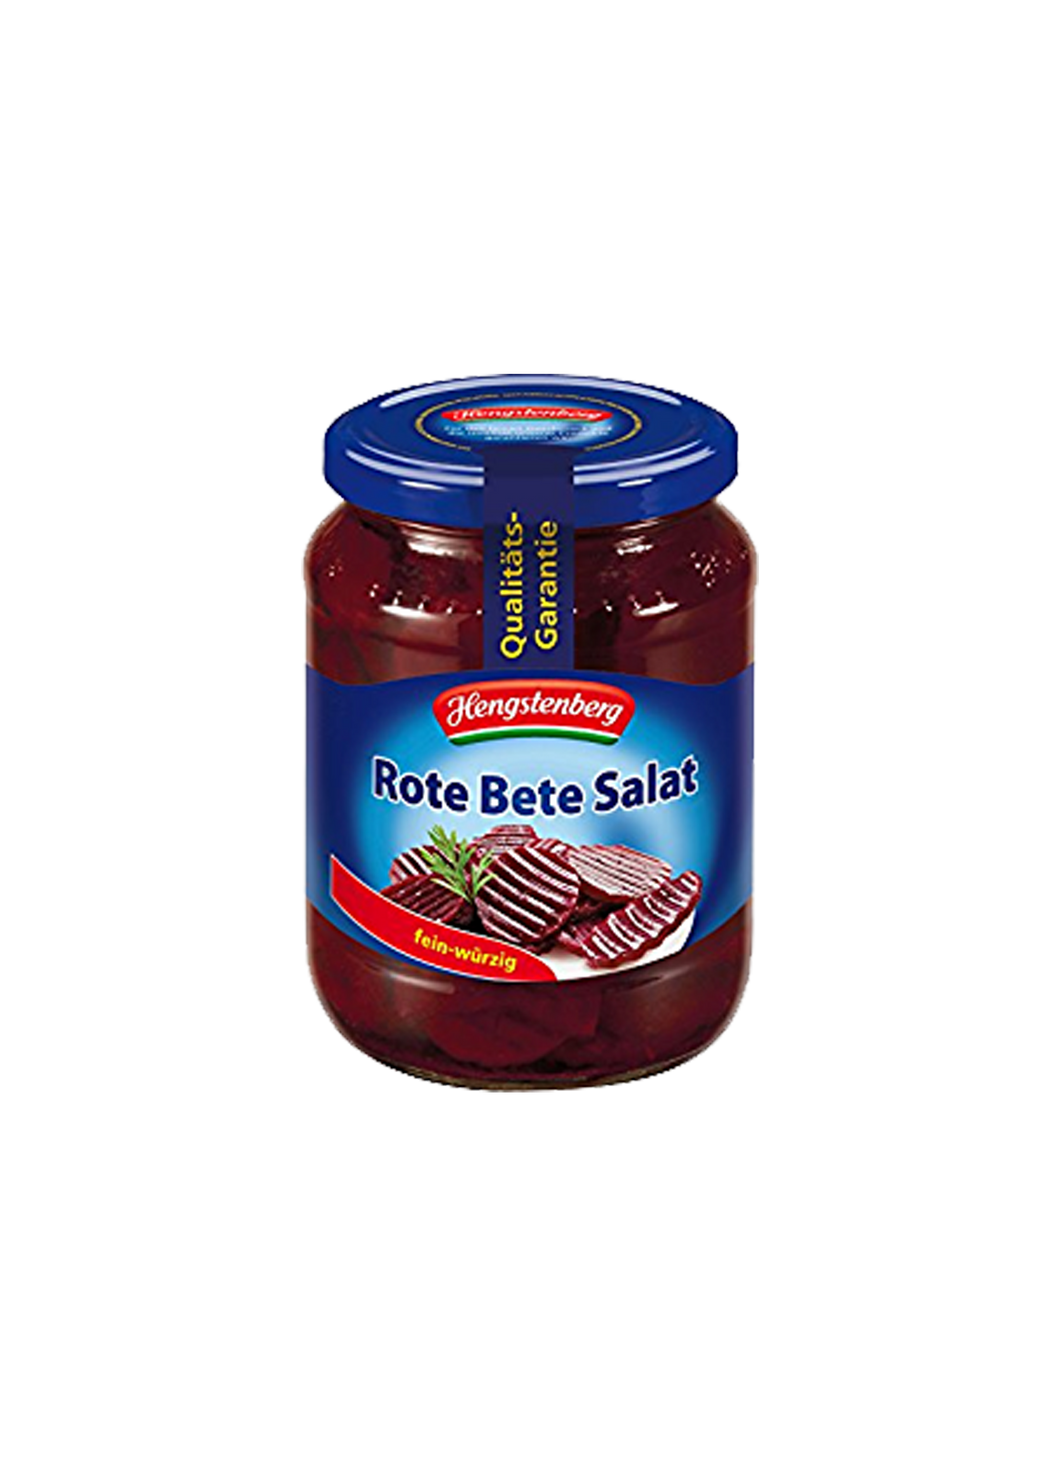 Hengstenberg Rote Bete Salat Fein-wurzig 330g